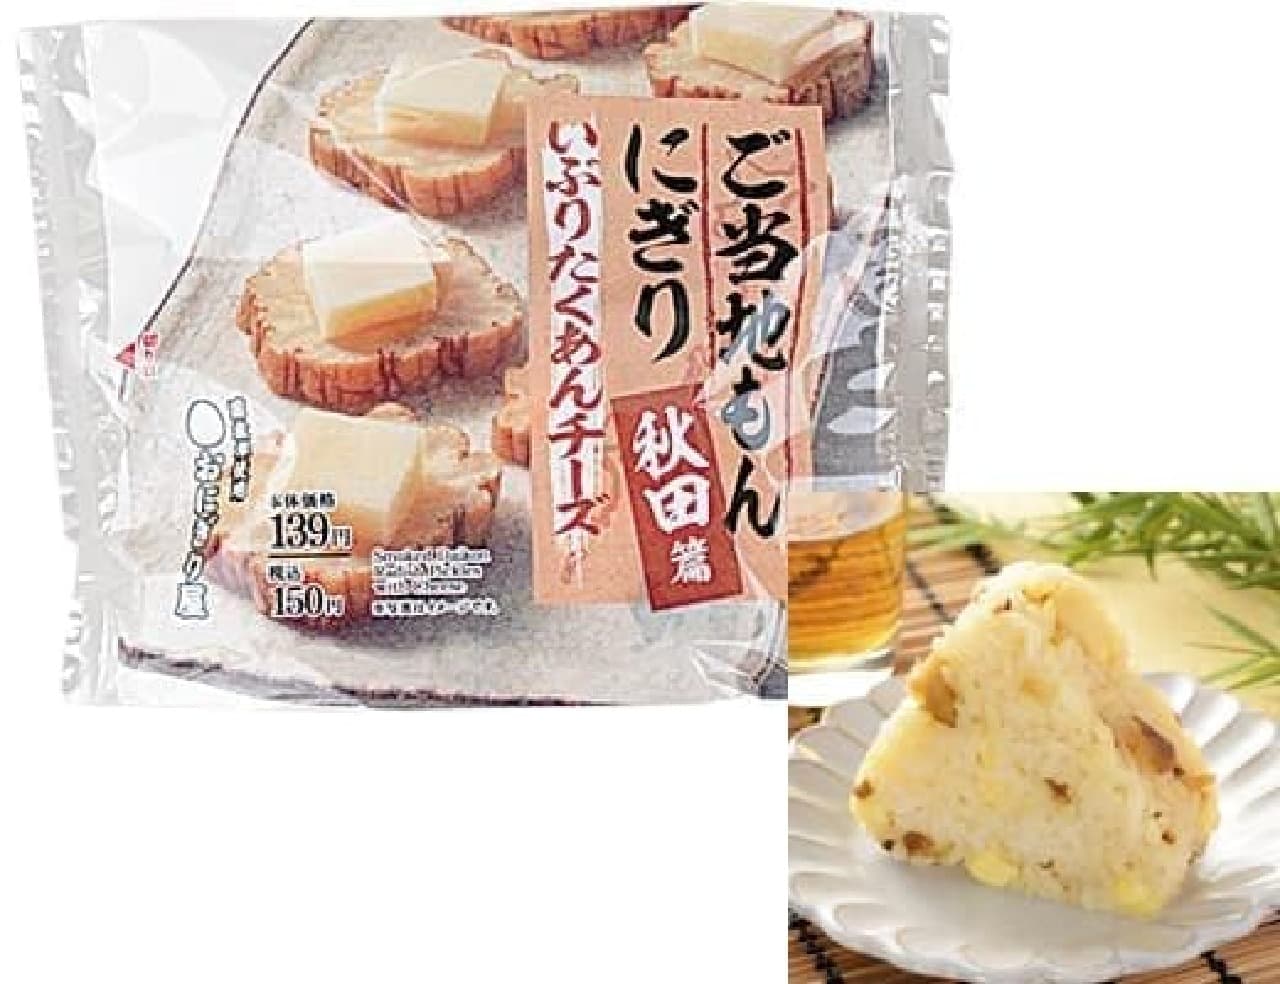 Lawson "Iburi-gakko cheese rice ball"